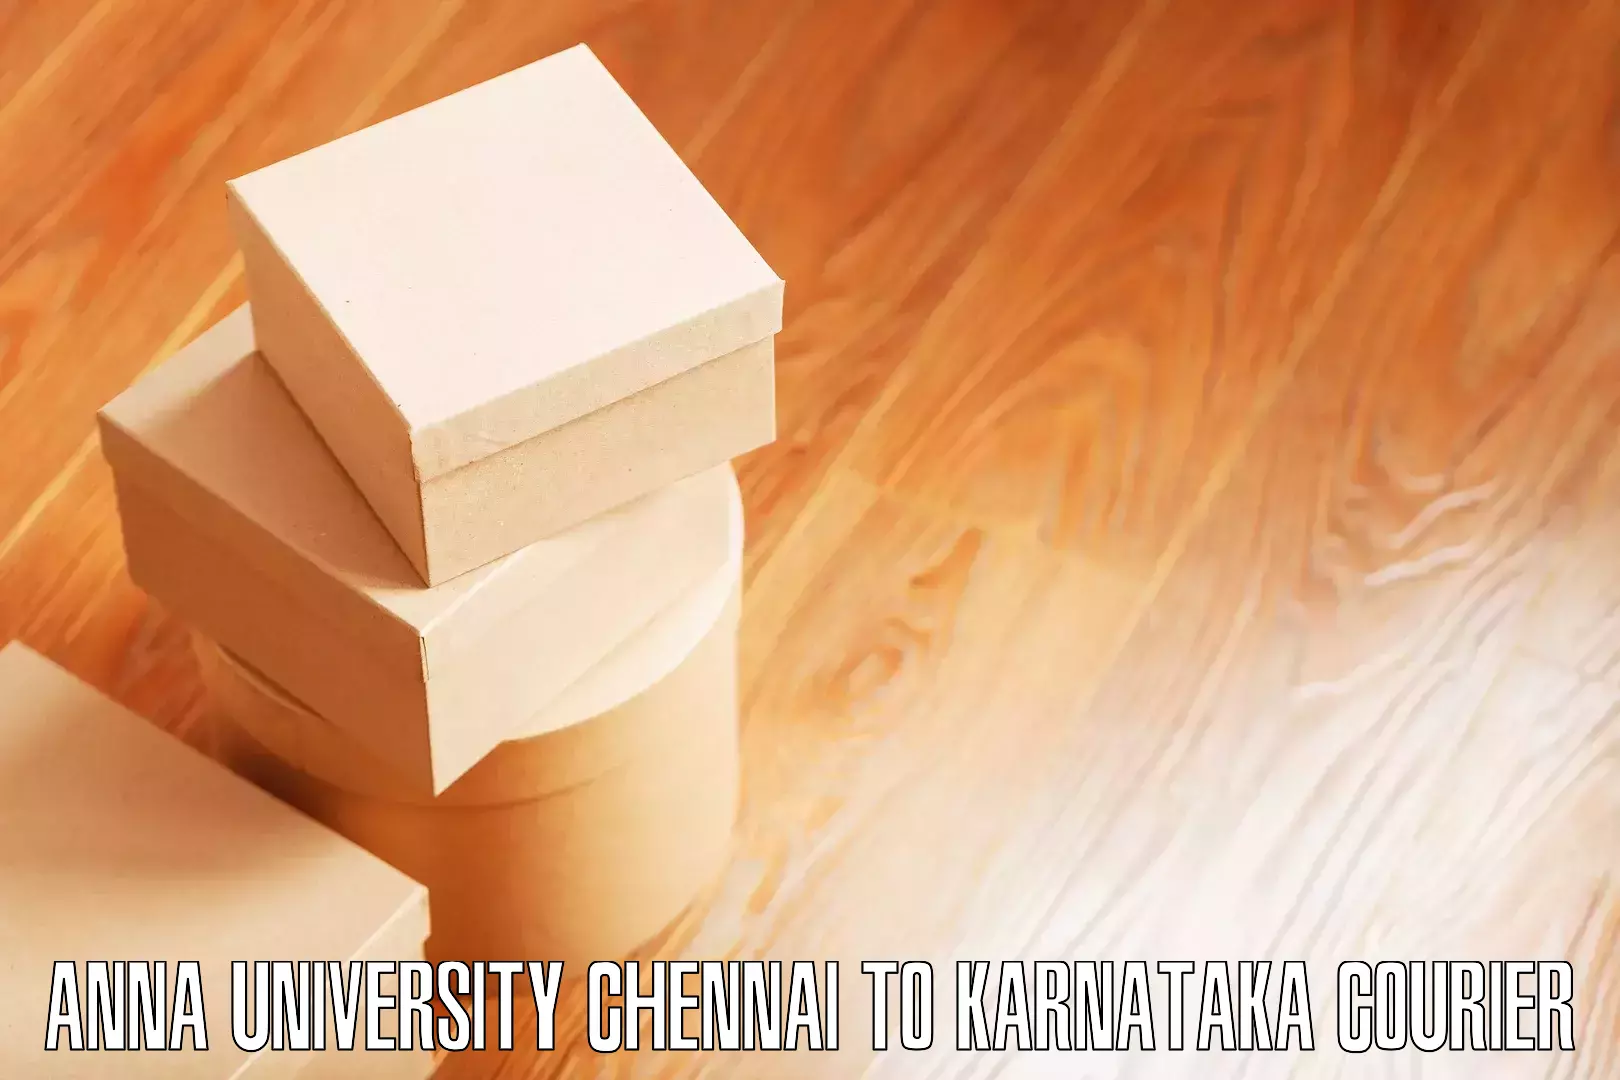 Furniture relocation experts Anna University Chennai to Ukkadagatri